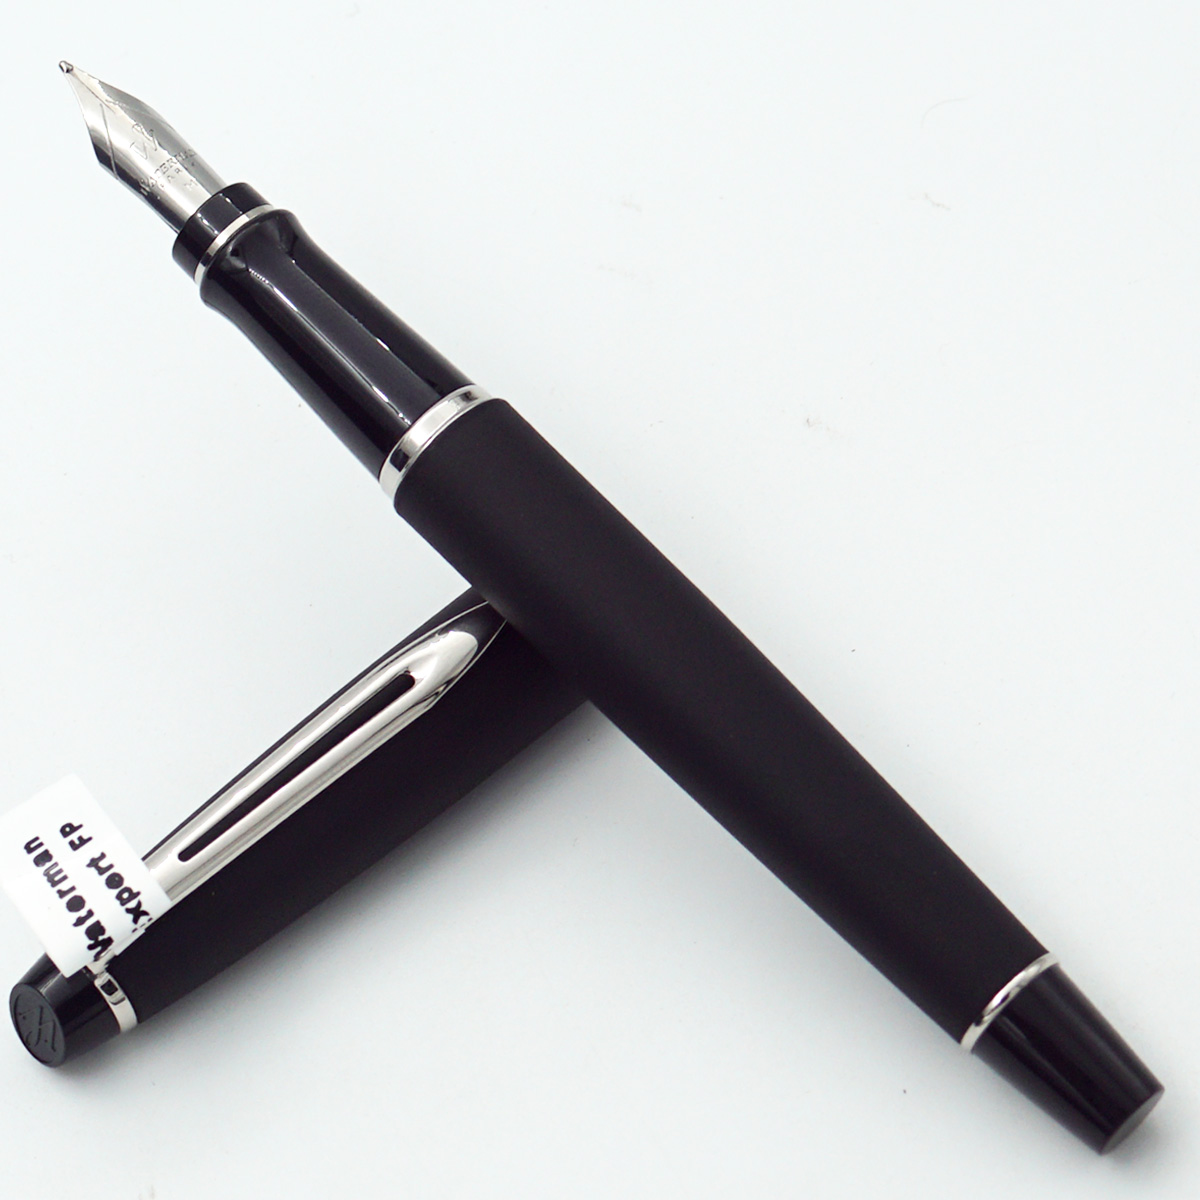 Waterman Expert Matte Black Color Body With Chrome Trim And Silver Clip Medium Nib Converter Type Fountain Pen SKU 24484